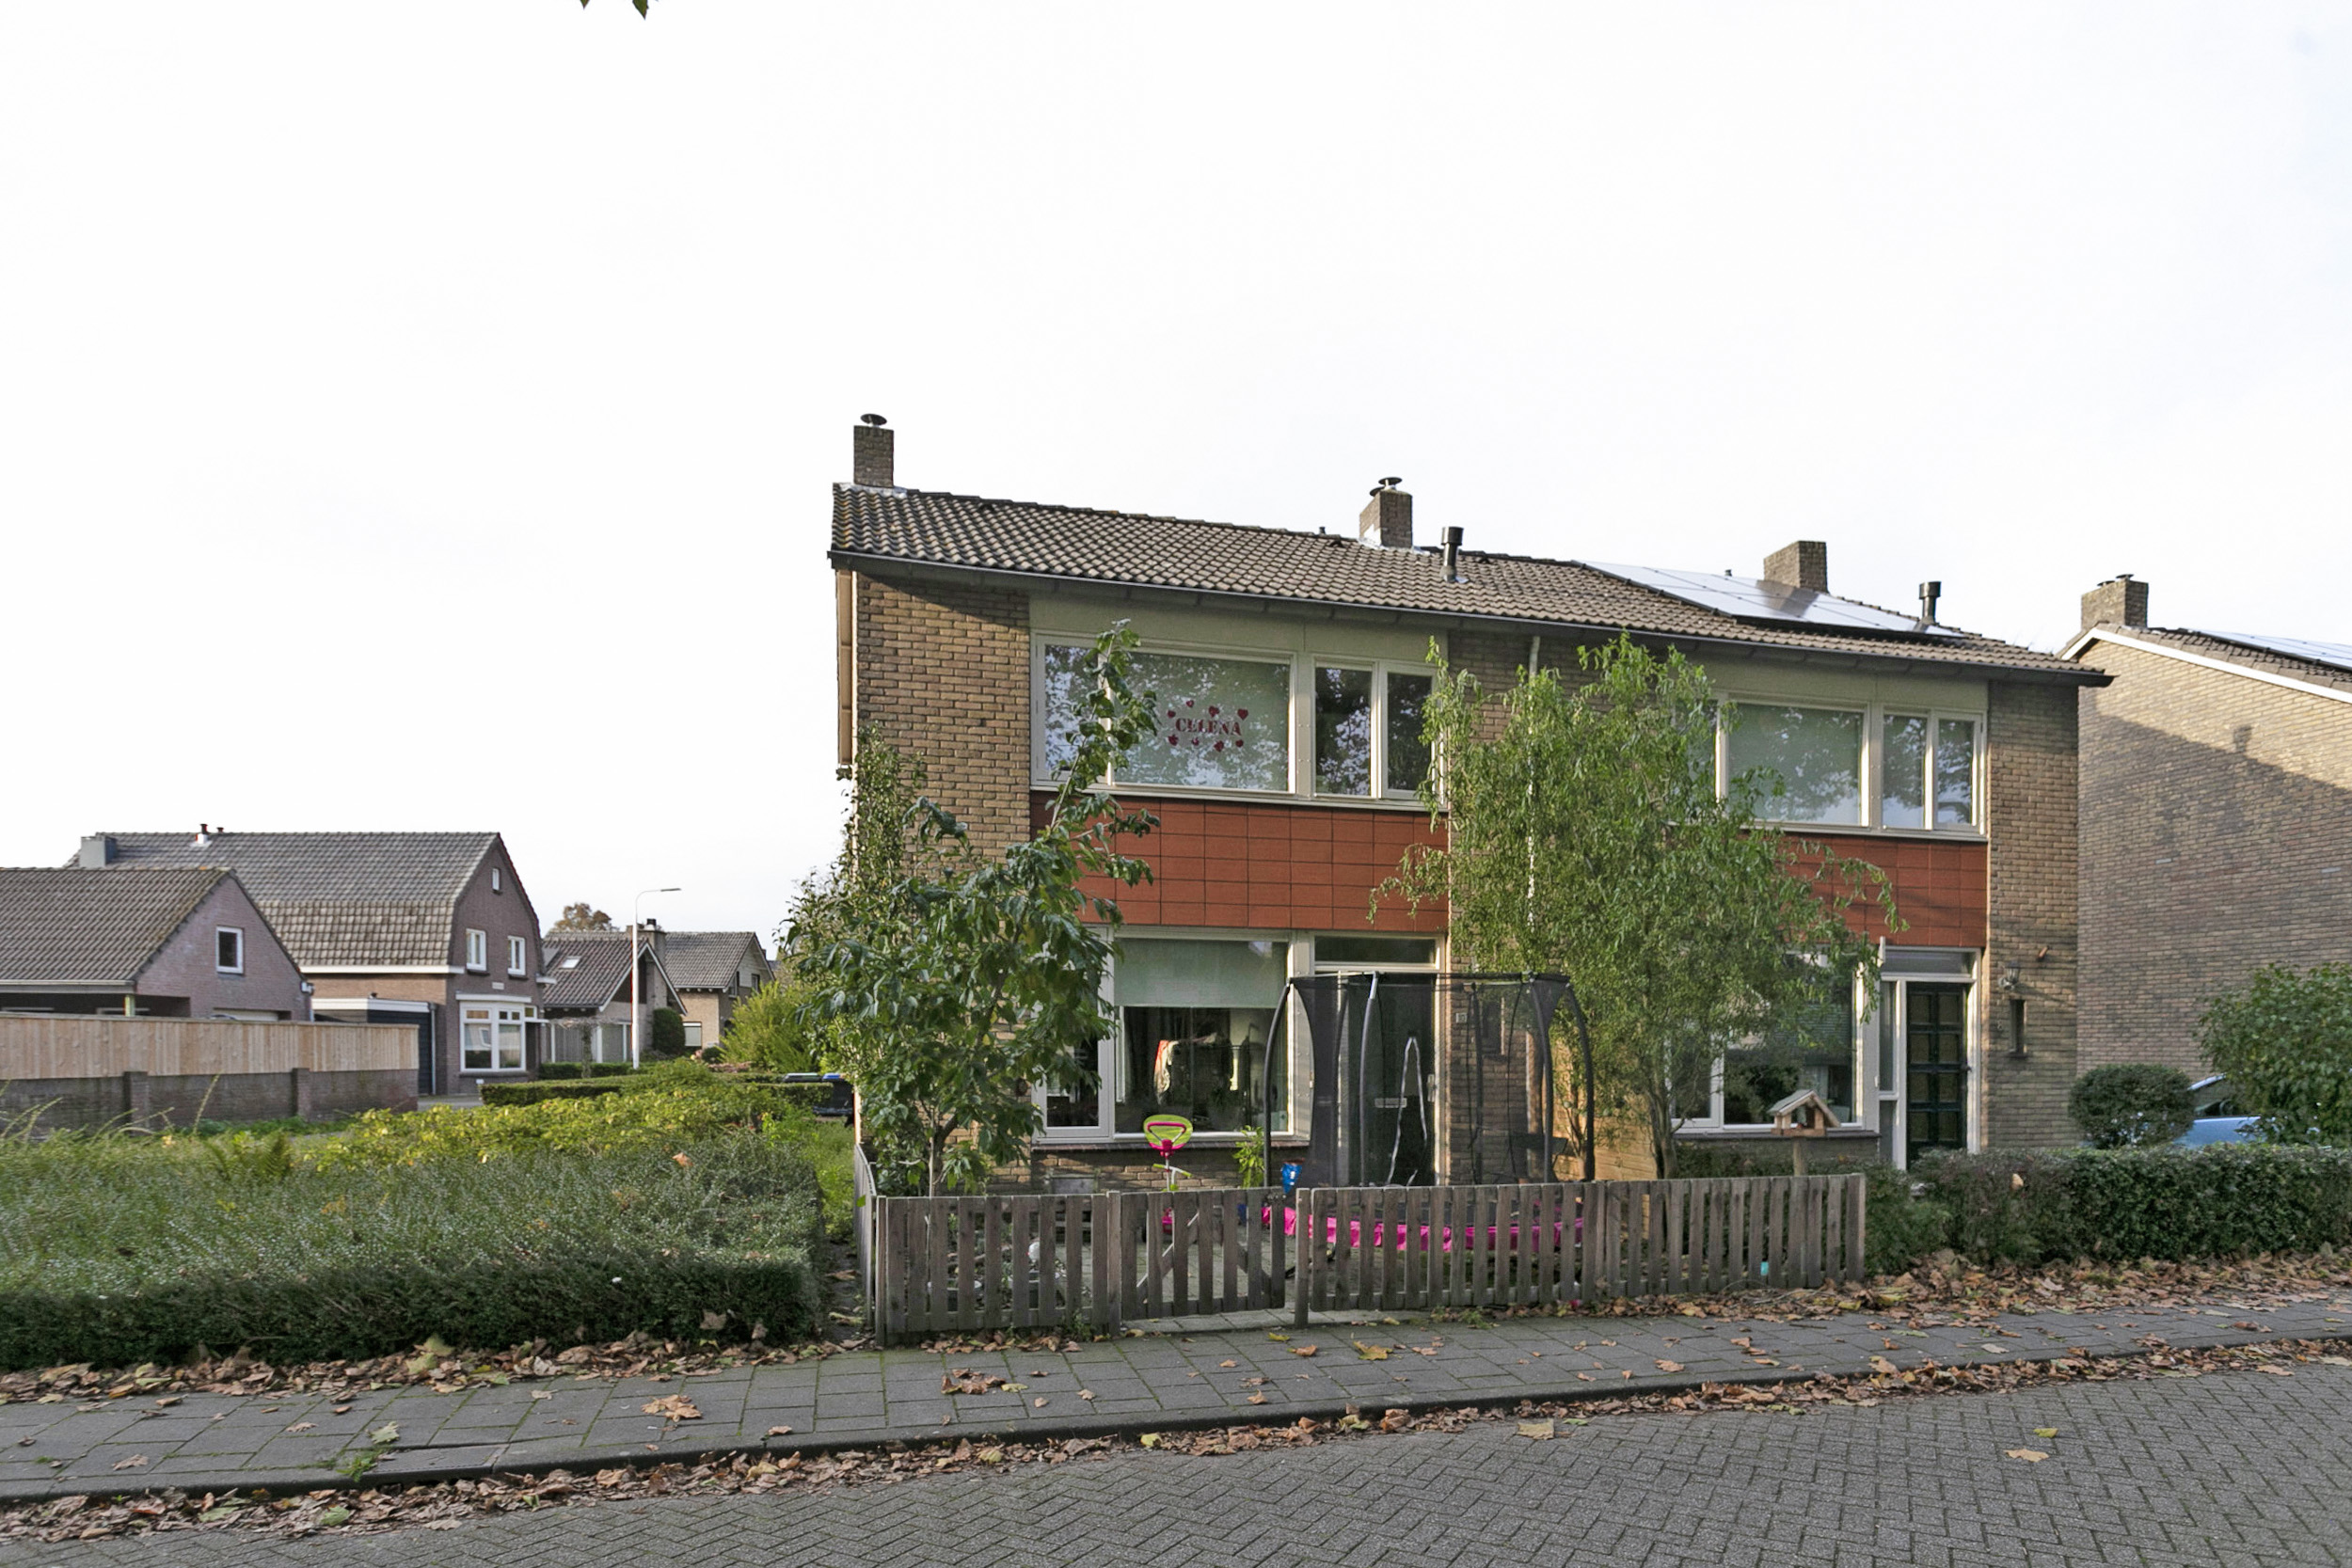 Dom S. Dubuissonstraat 10, 5056 HN Berkel-Enschot, Nederland